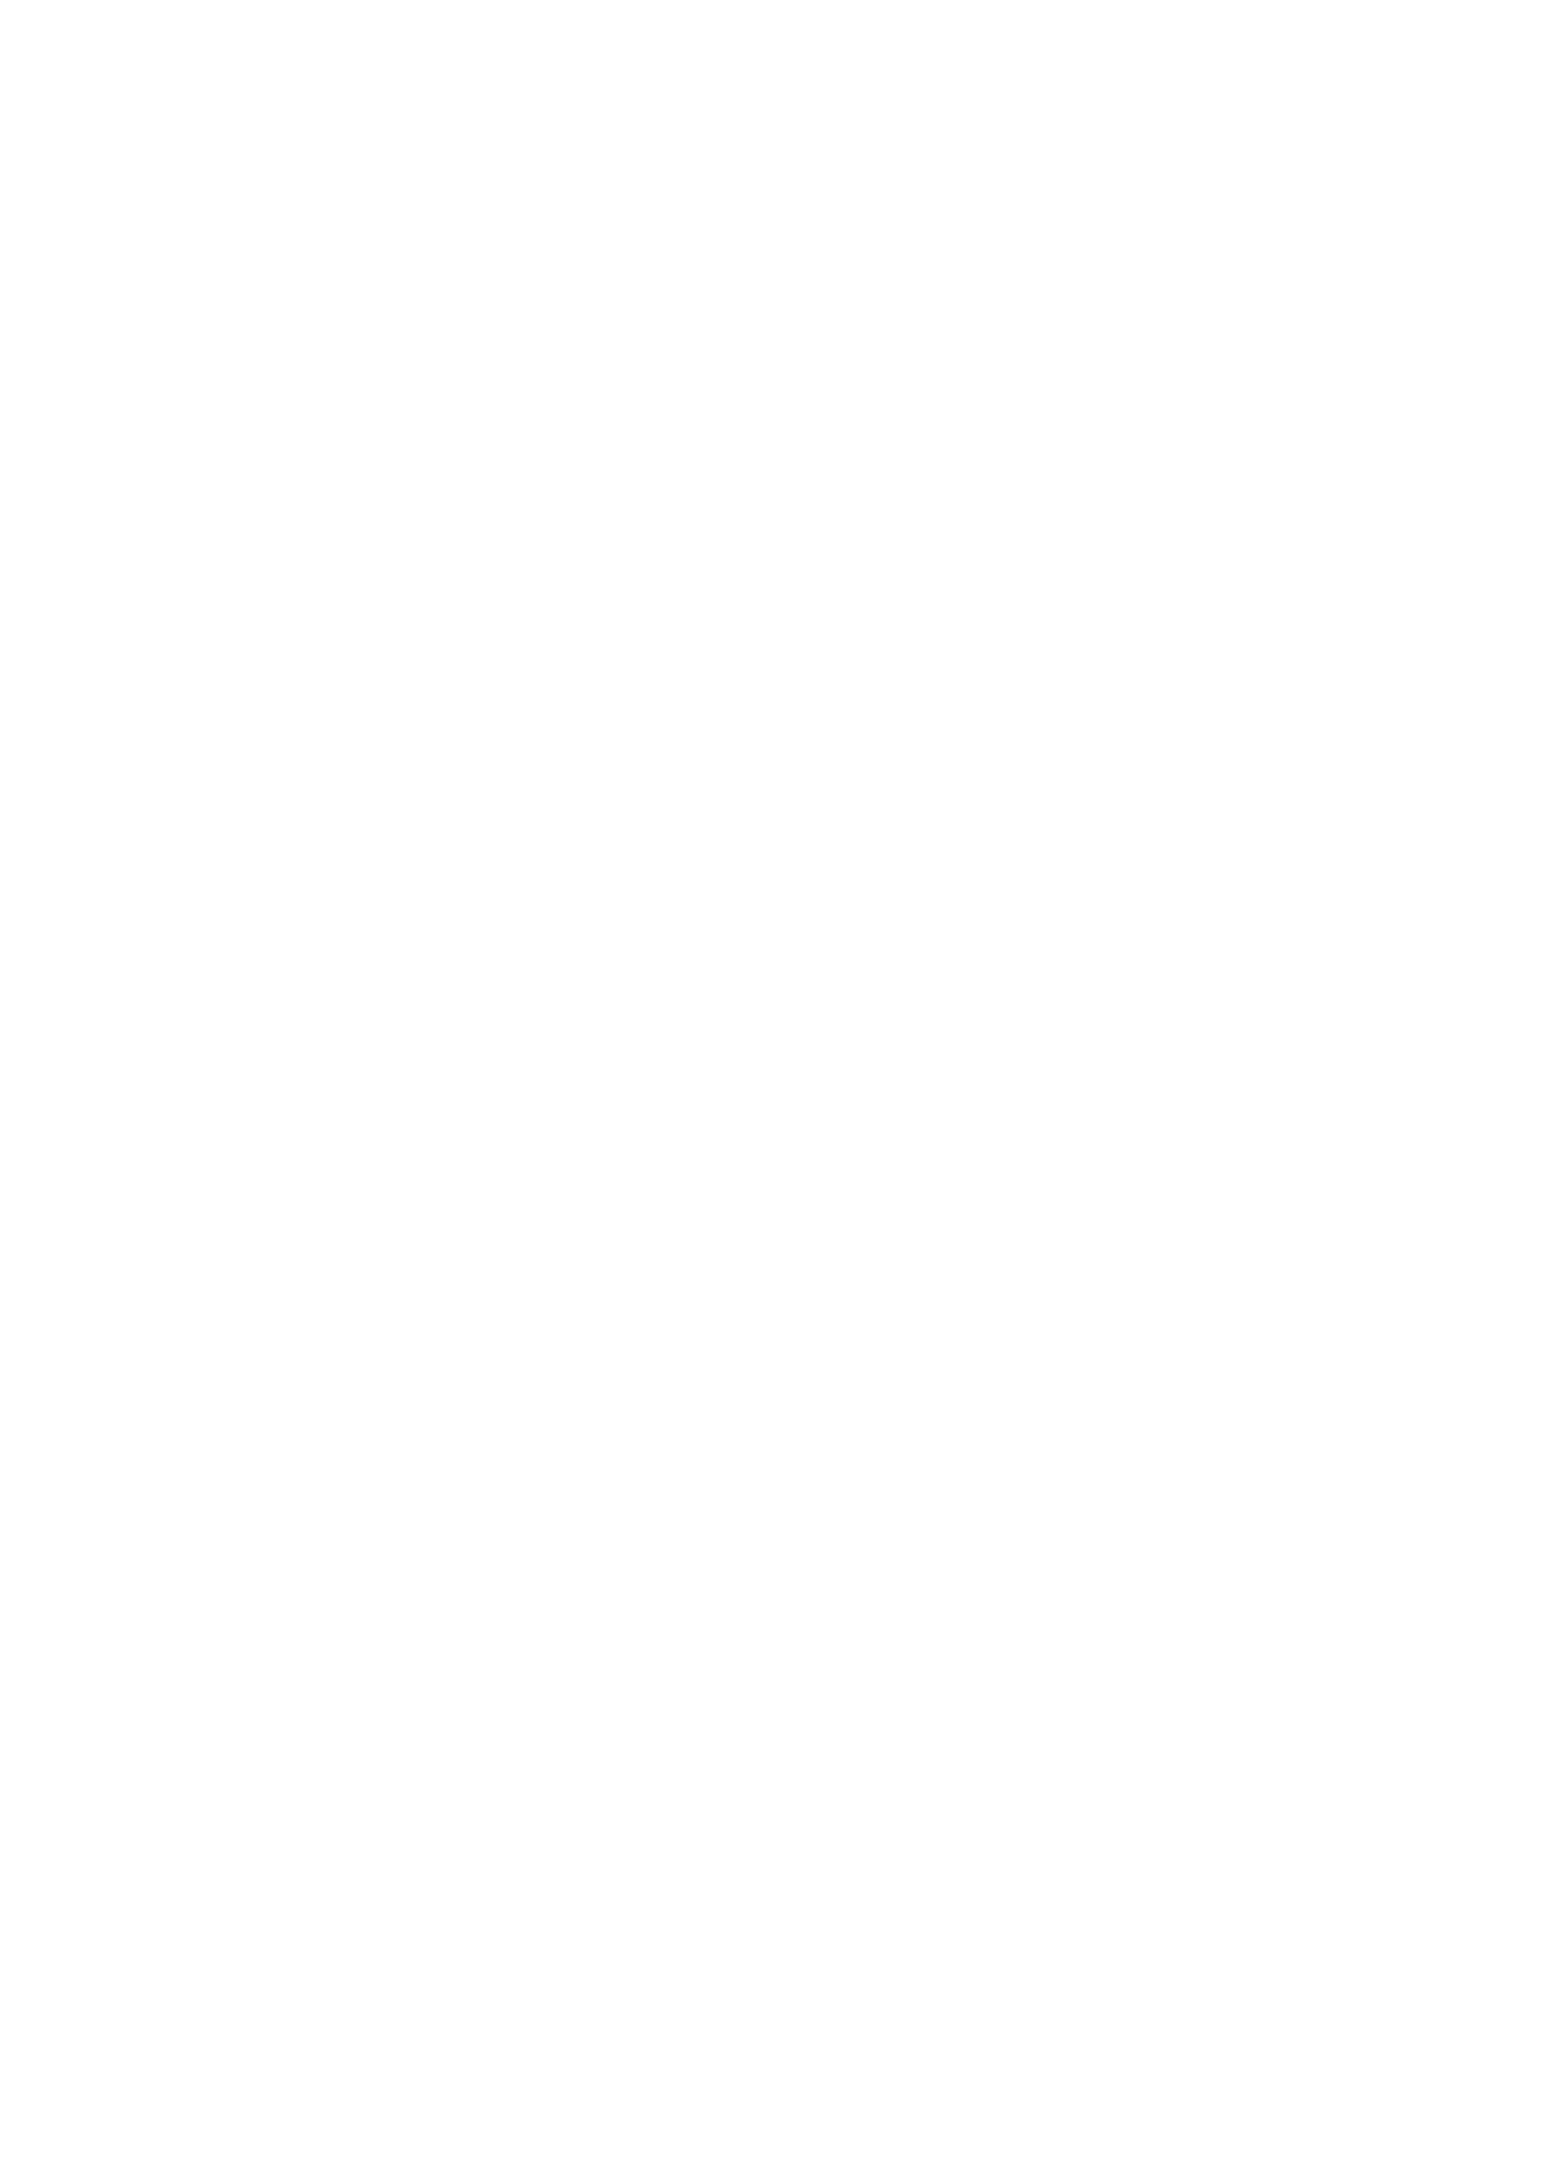 The Harpenden Arms